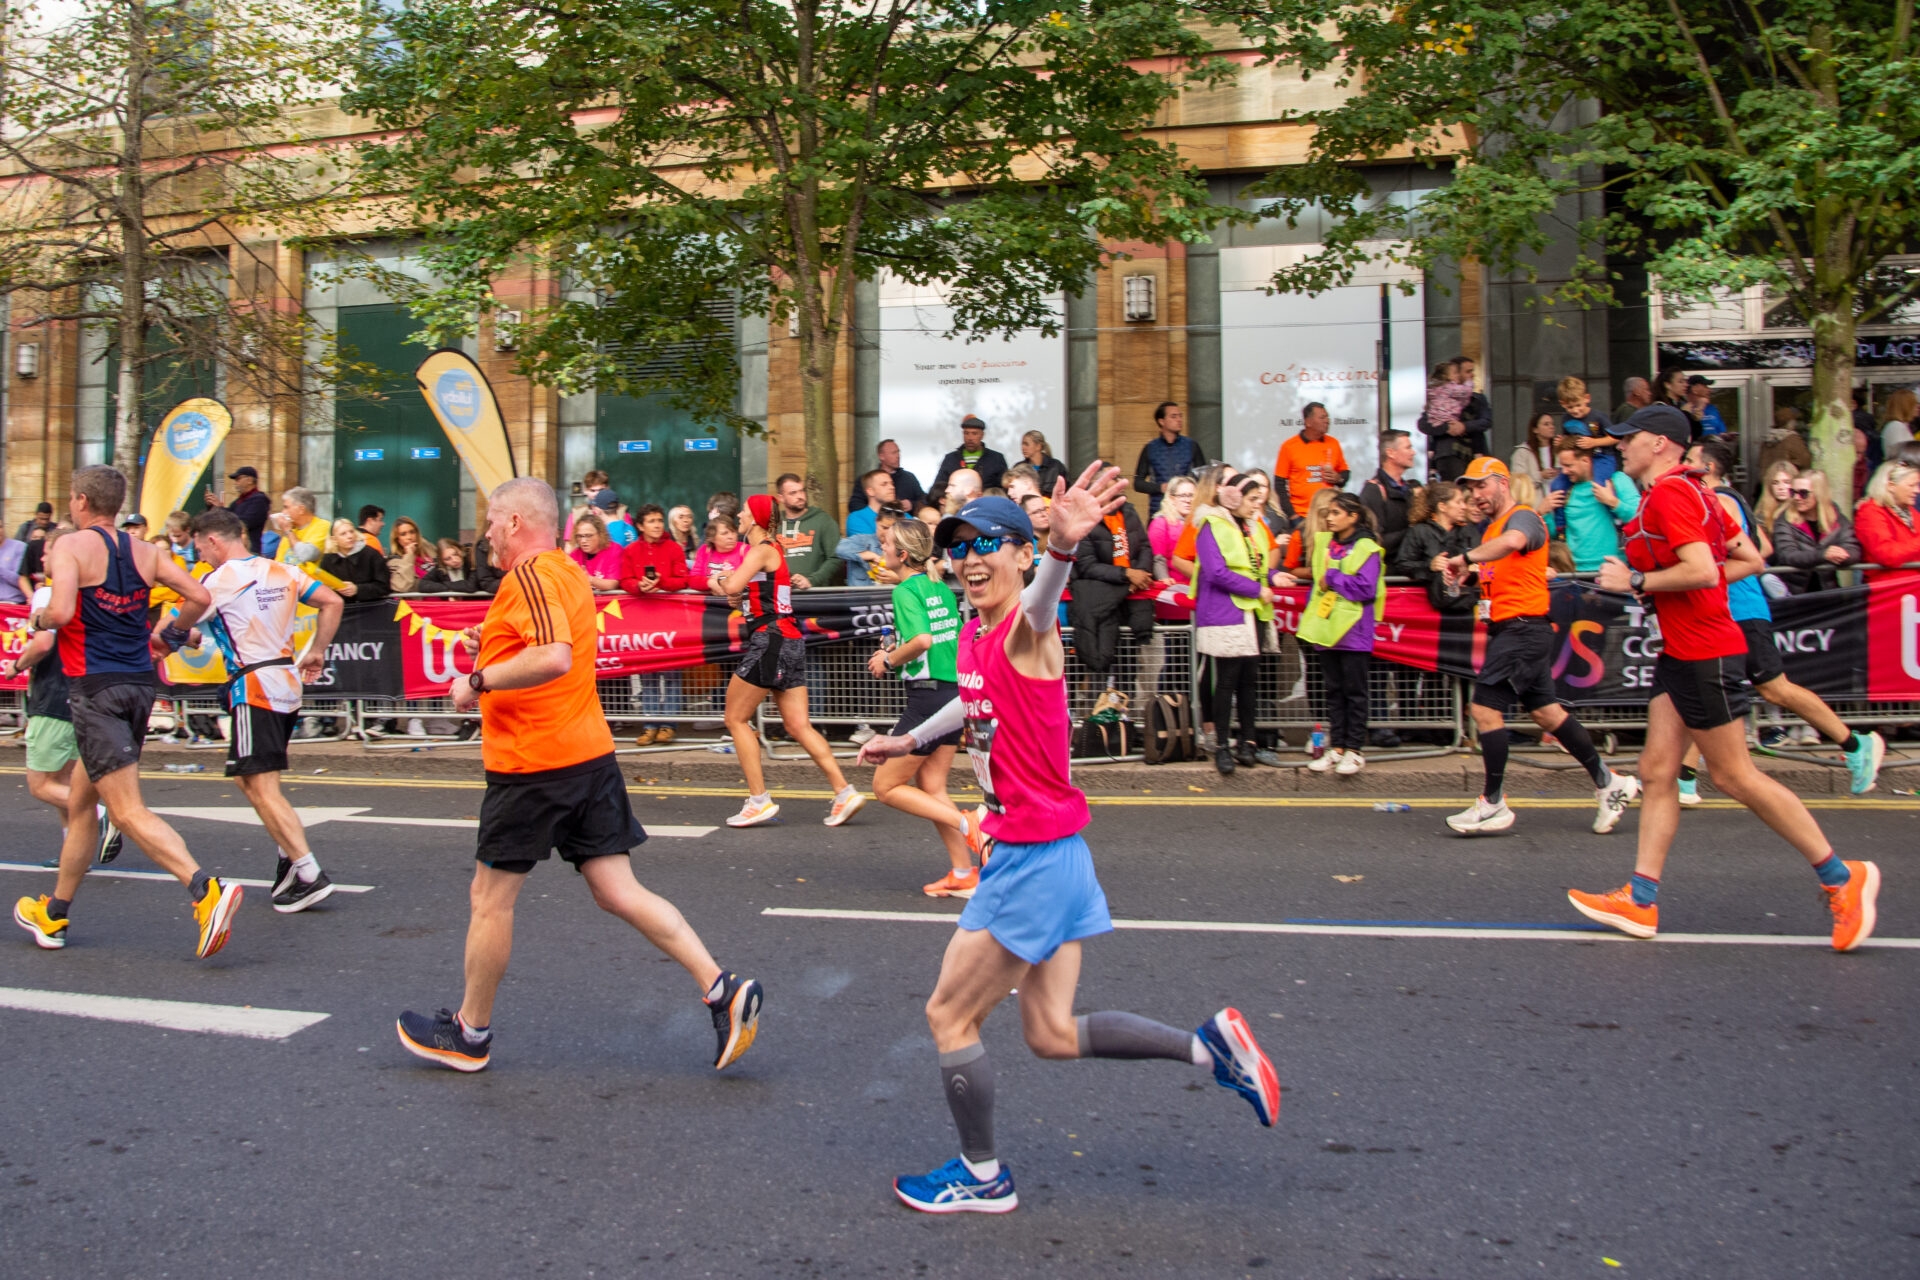 Female runner waving at camera while running the London Marathon through Canary Wharf